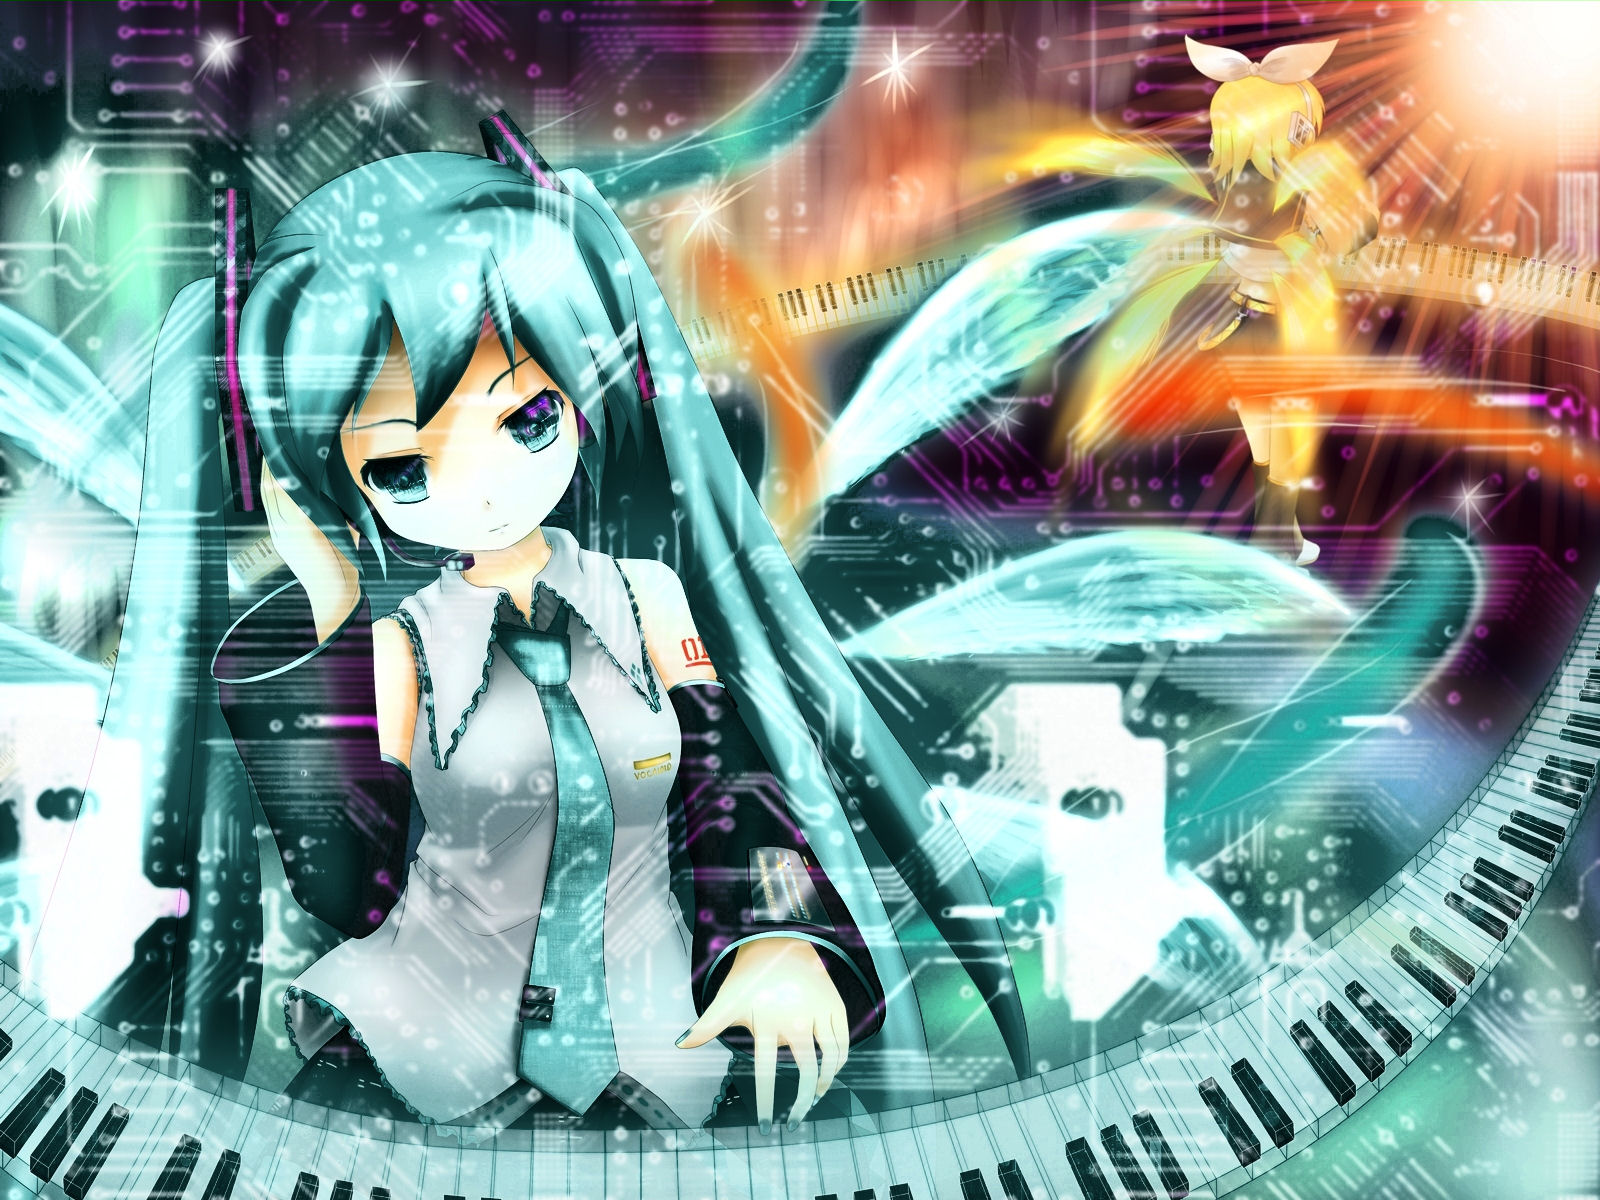 Hatsune Miku and Rin Kagamine playing piano in vibrant HD wallpaper.